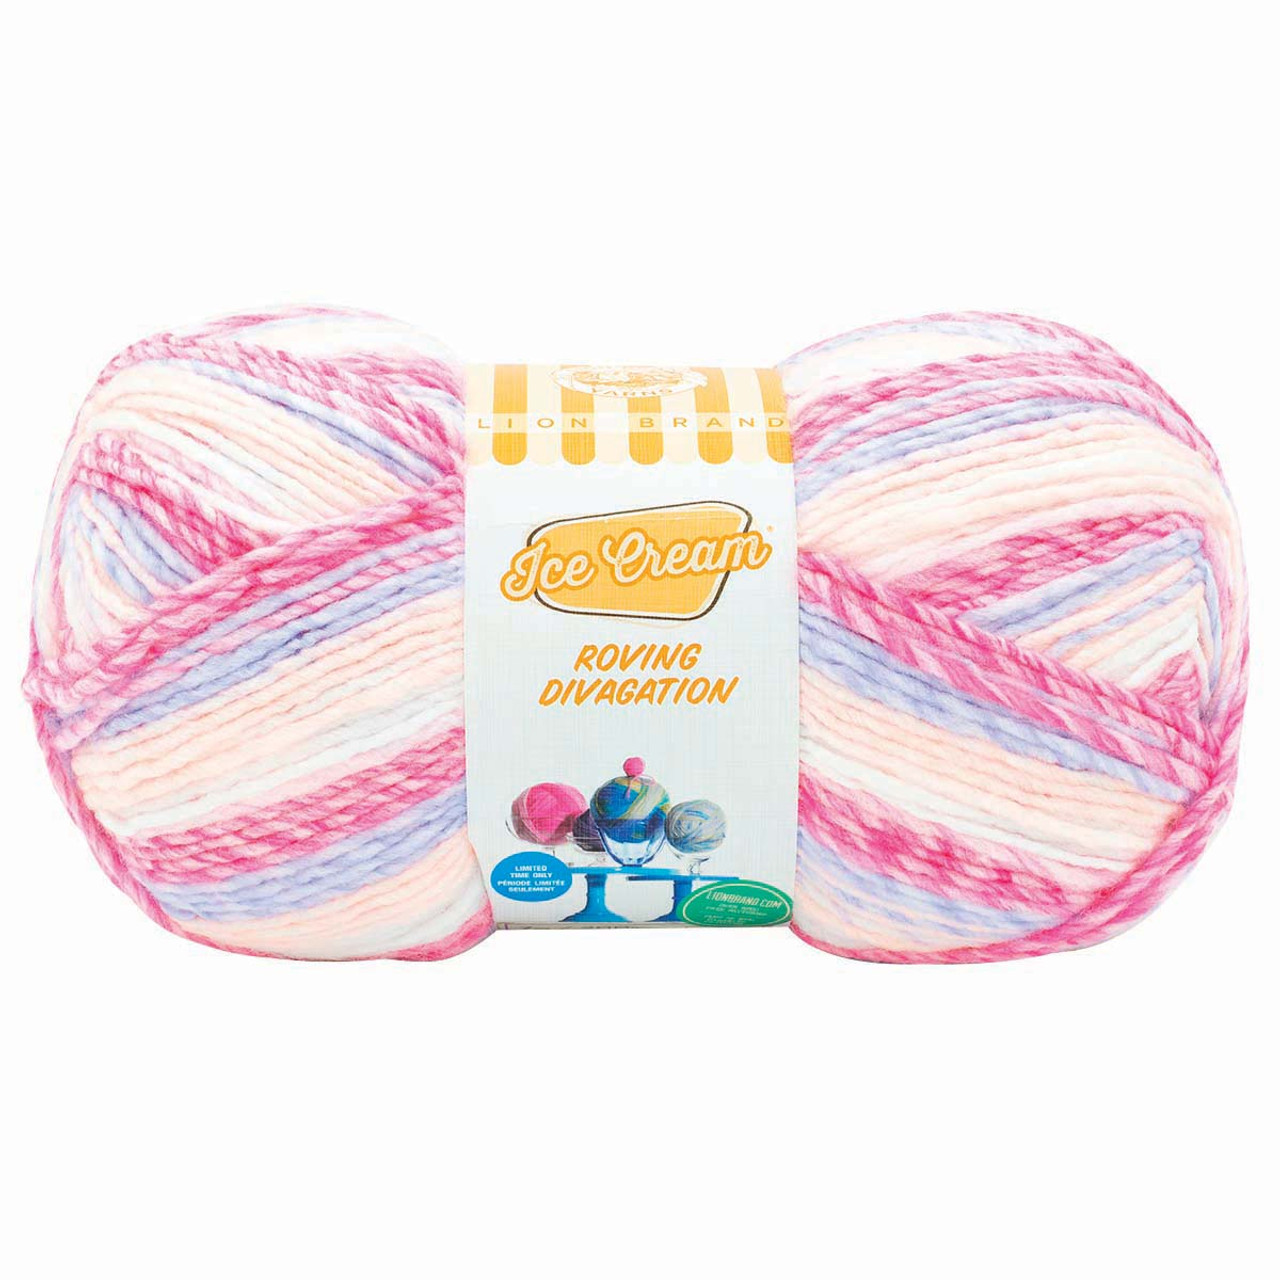 Lion Brand Ice Cream Roving Stripes Bag of 3 Yarn Pack